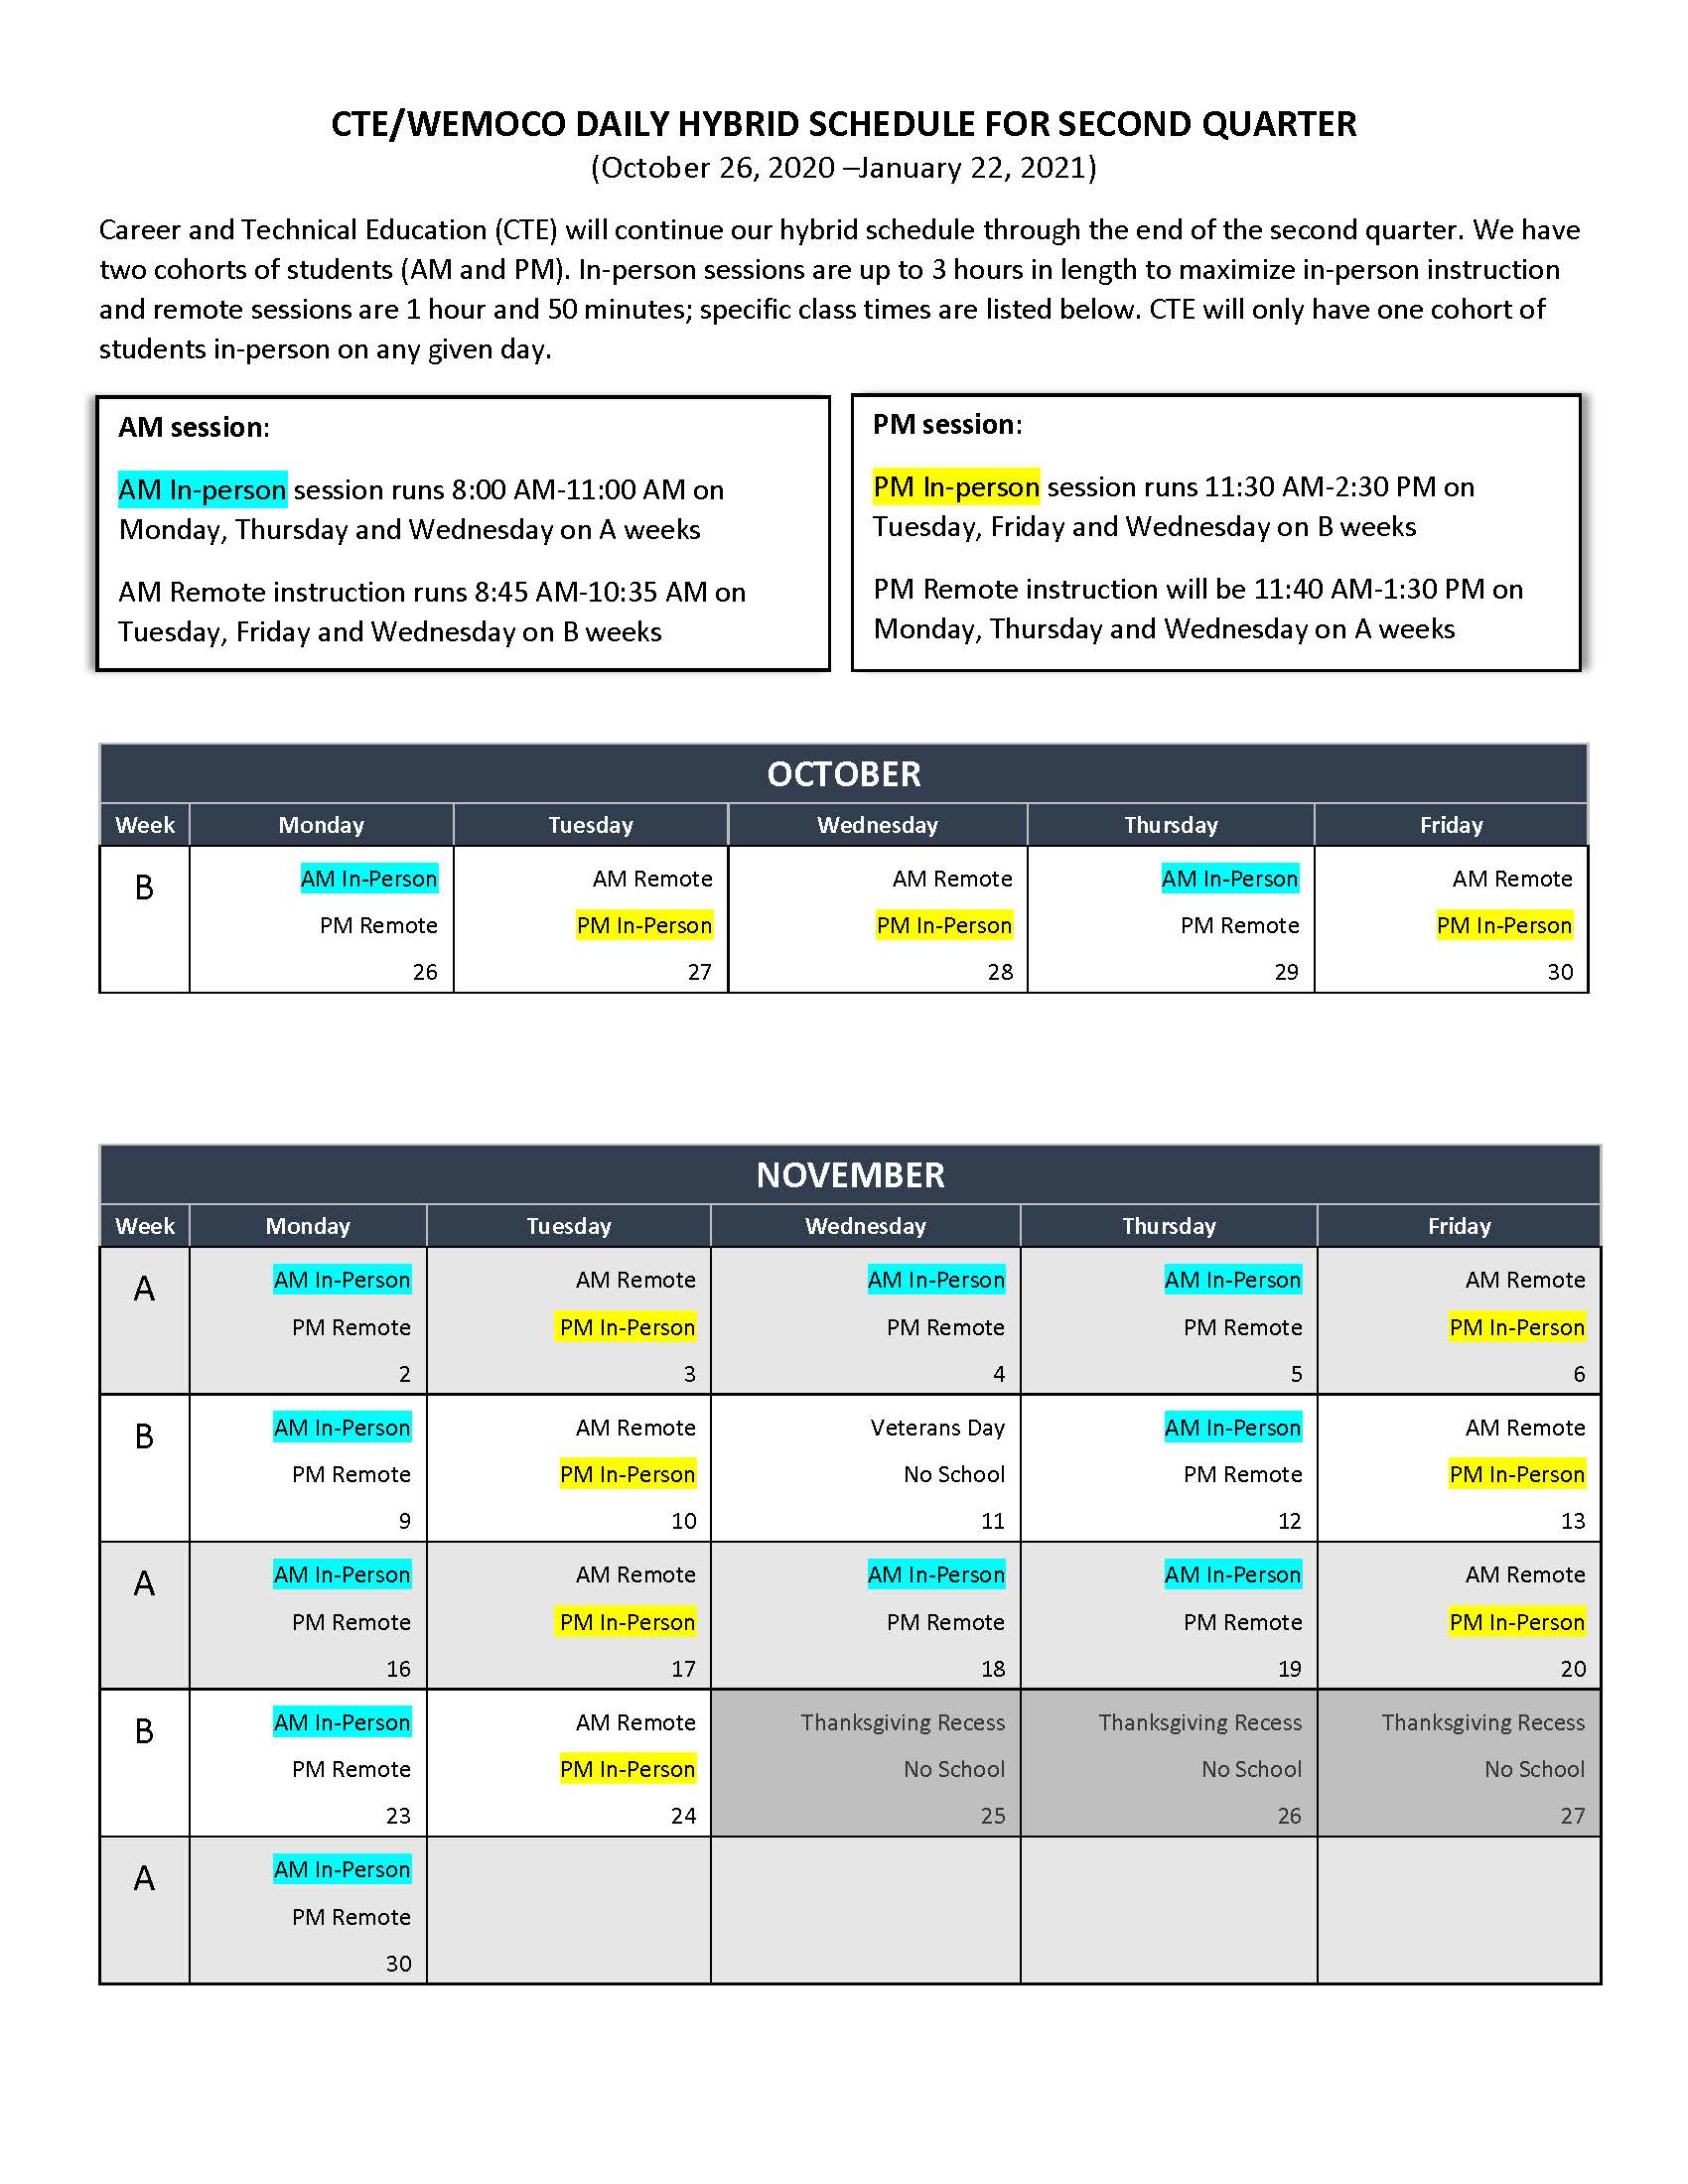 Image of the WEMOCO Second Quarter Hybrid Schedule PDF